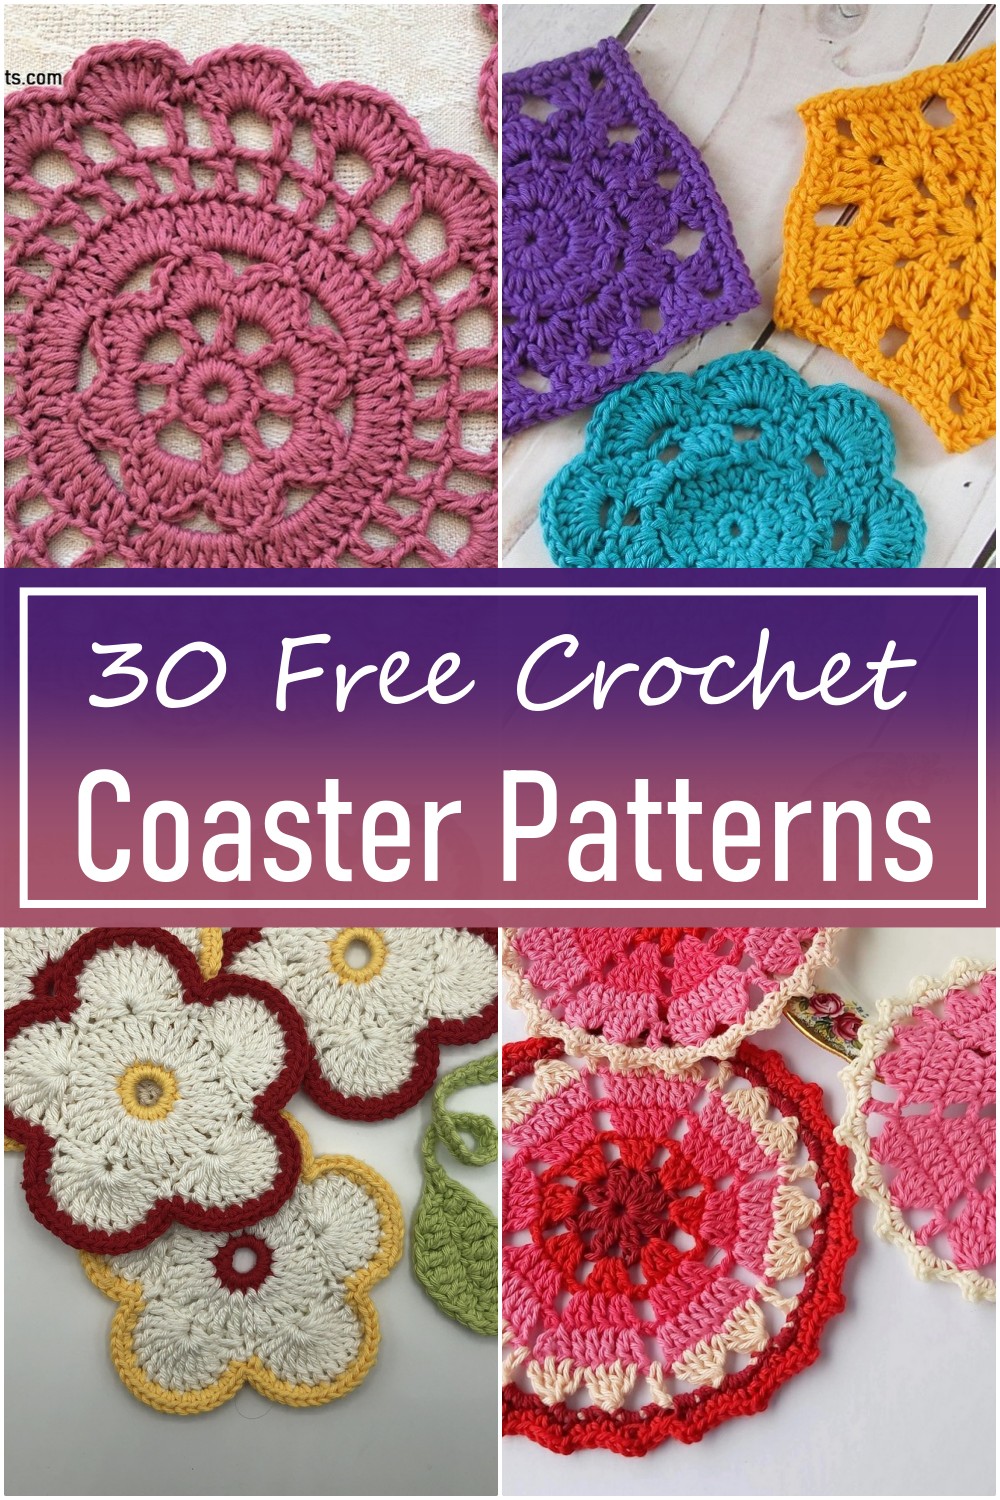 30 Free Crochet Coaster Patterns